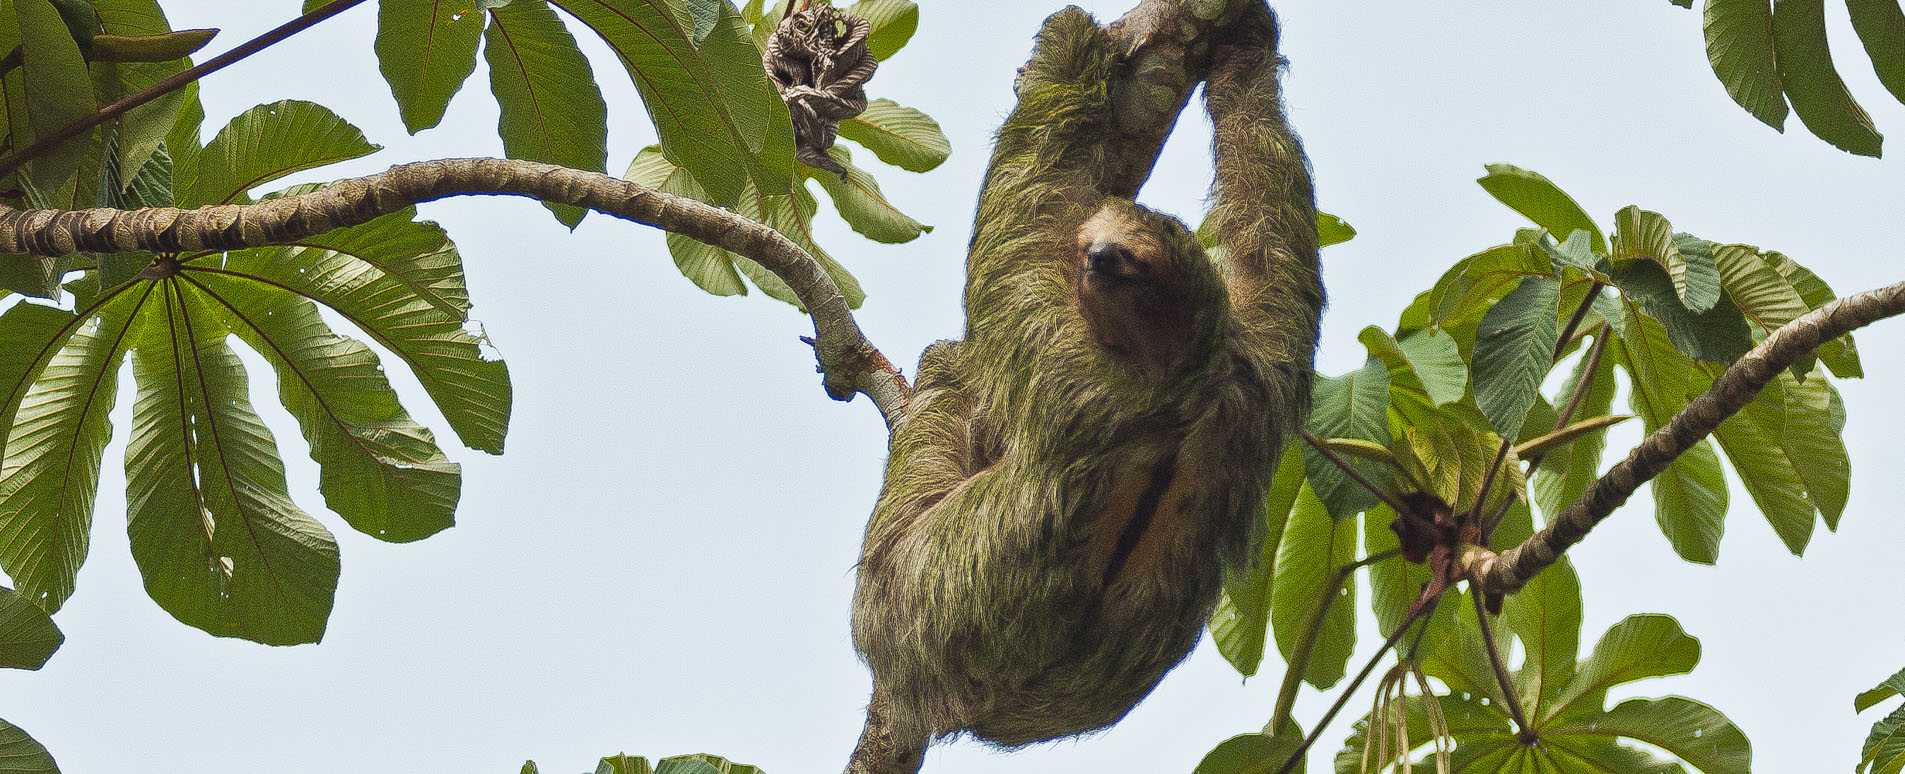 costa rica wildlife sloths